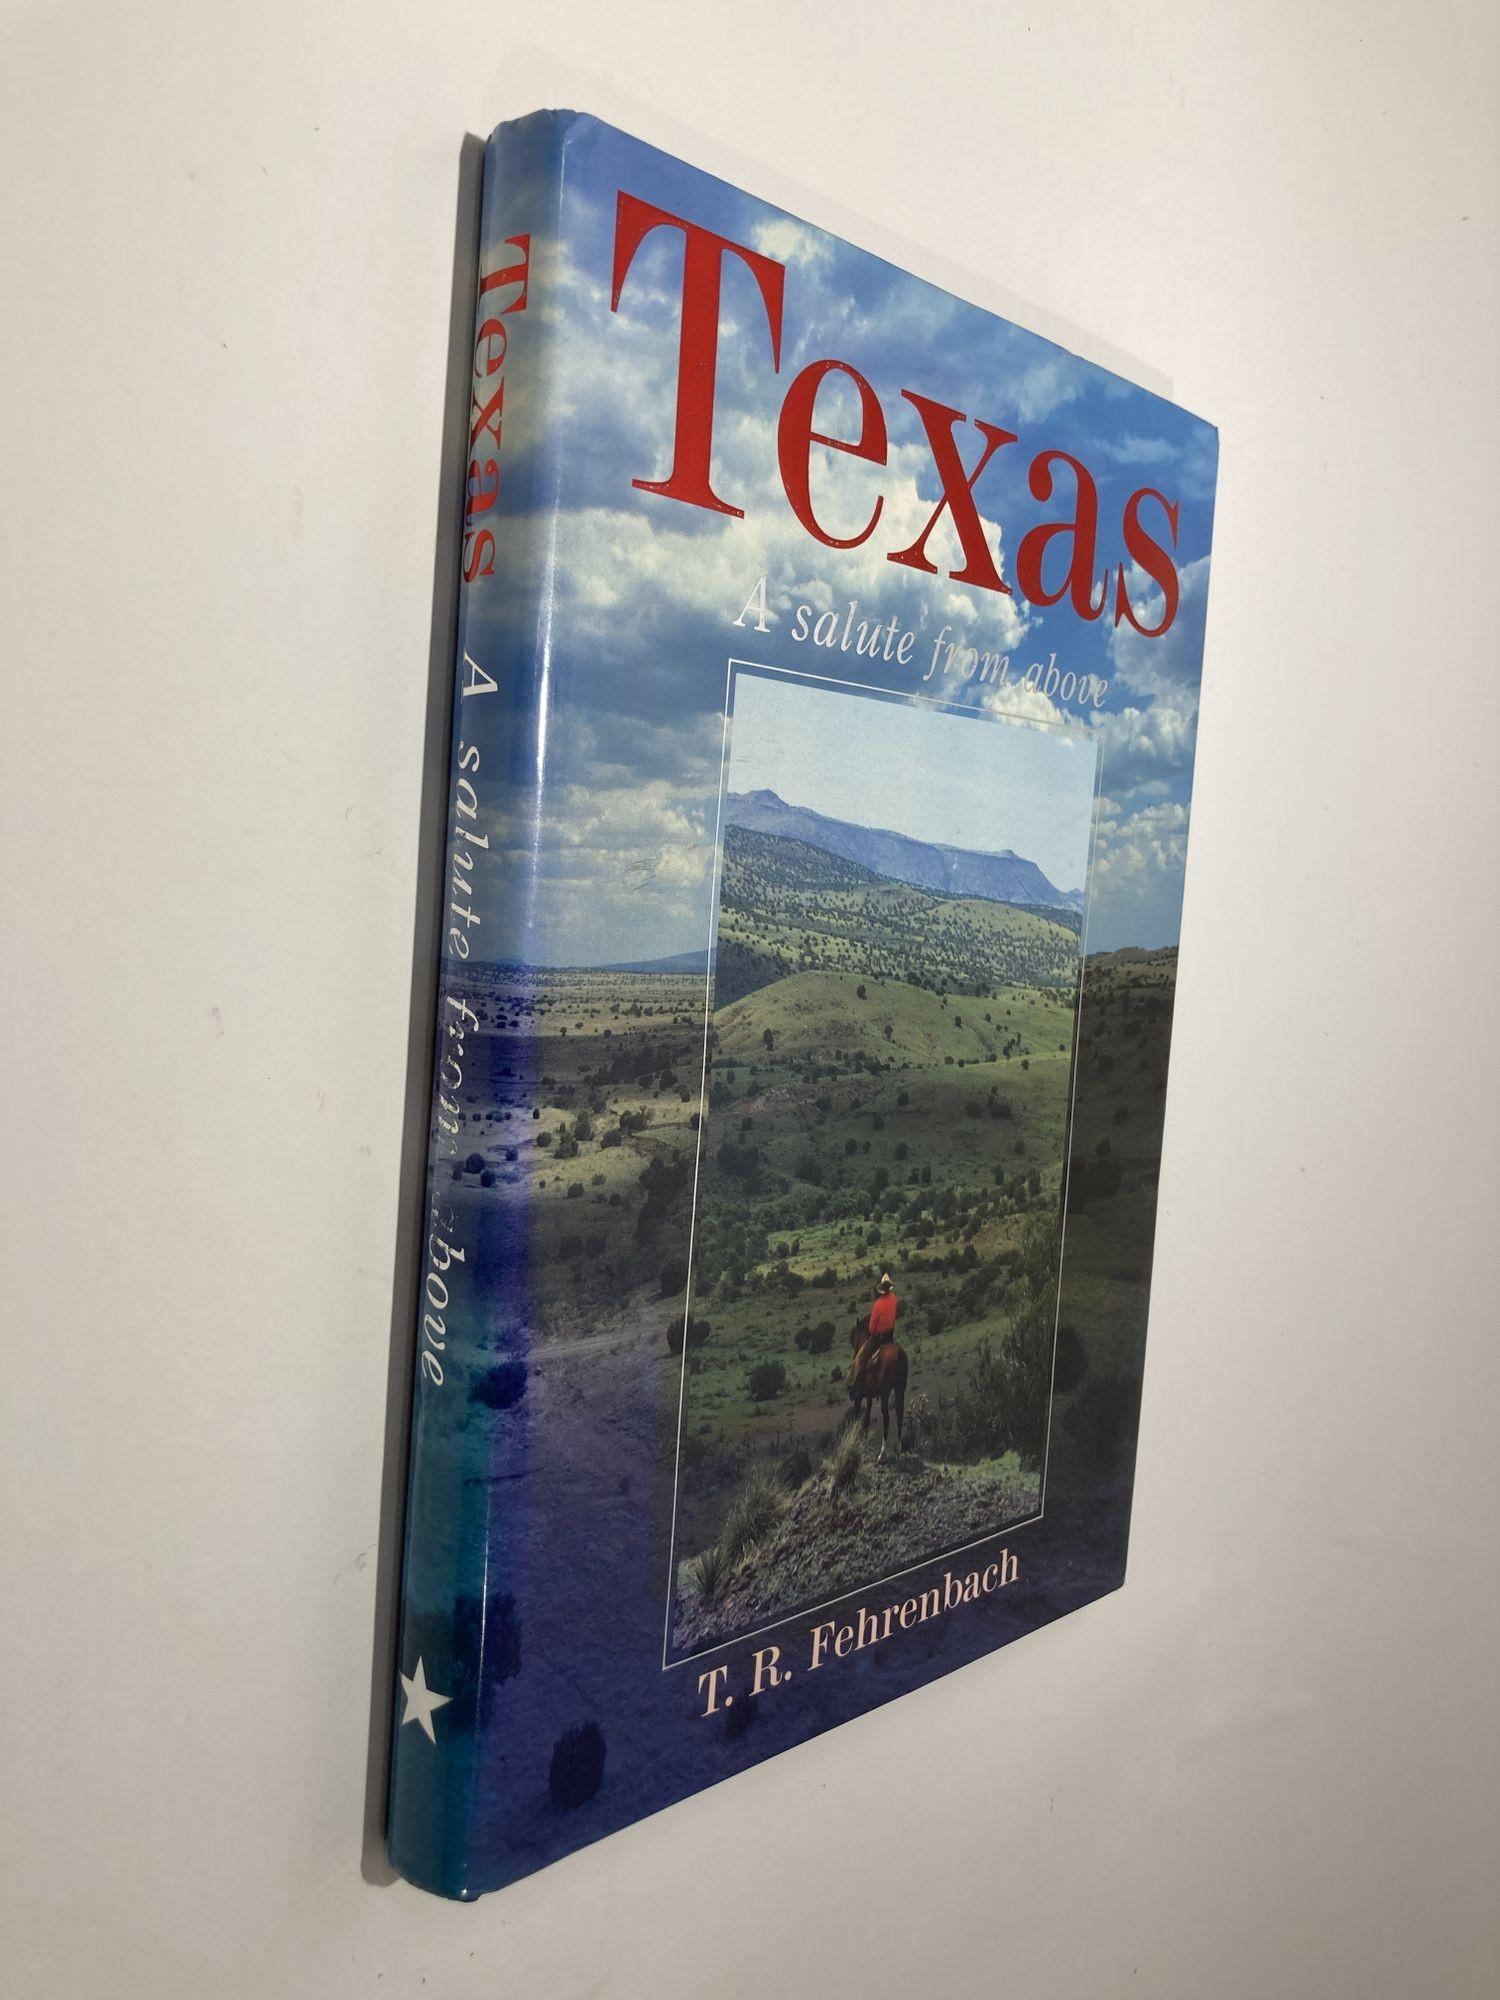 Classique américain Le Texas : un salut vu d'en haut Fehrenbach, T. R 1985 en vente